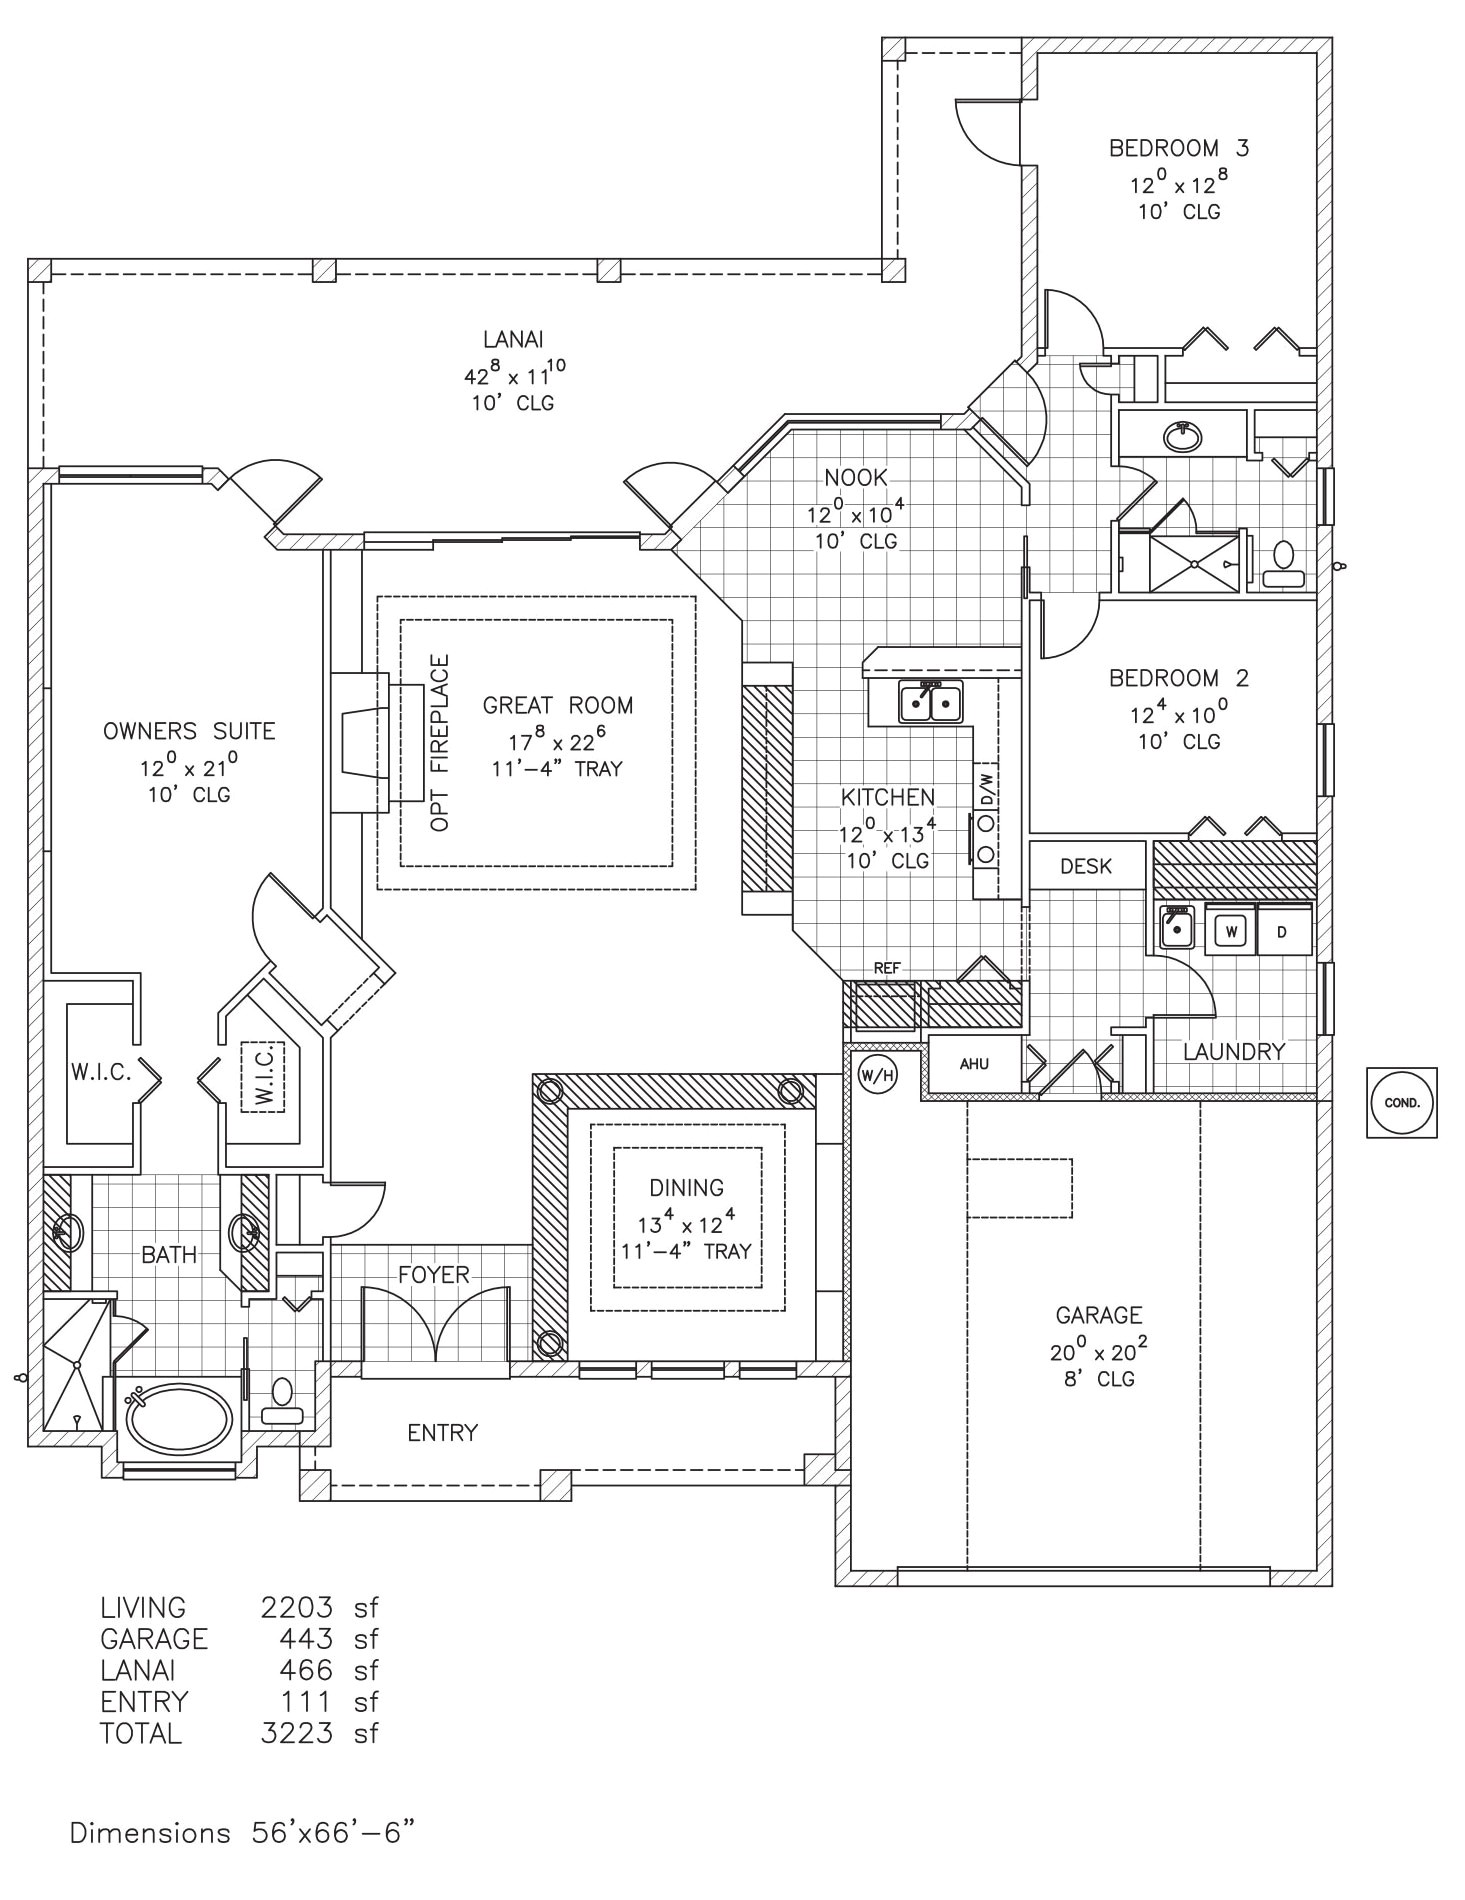 Custom Home Floor Plans Florida Carolina New Home Floor Plan Palm Coast and Flagler